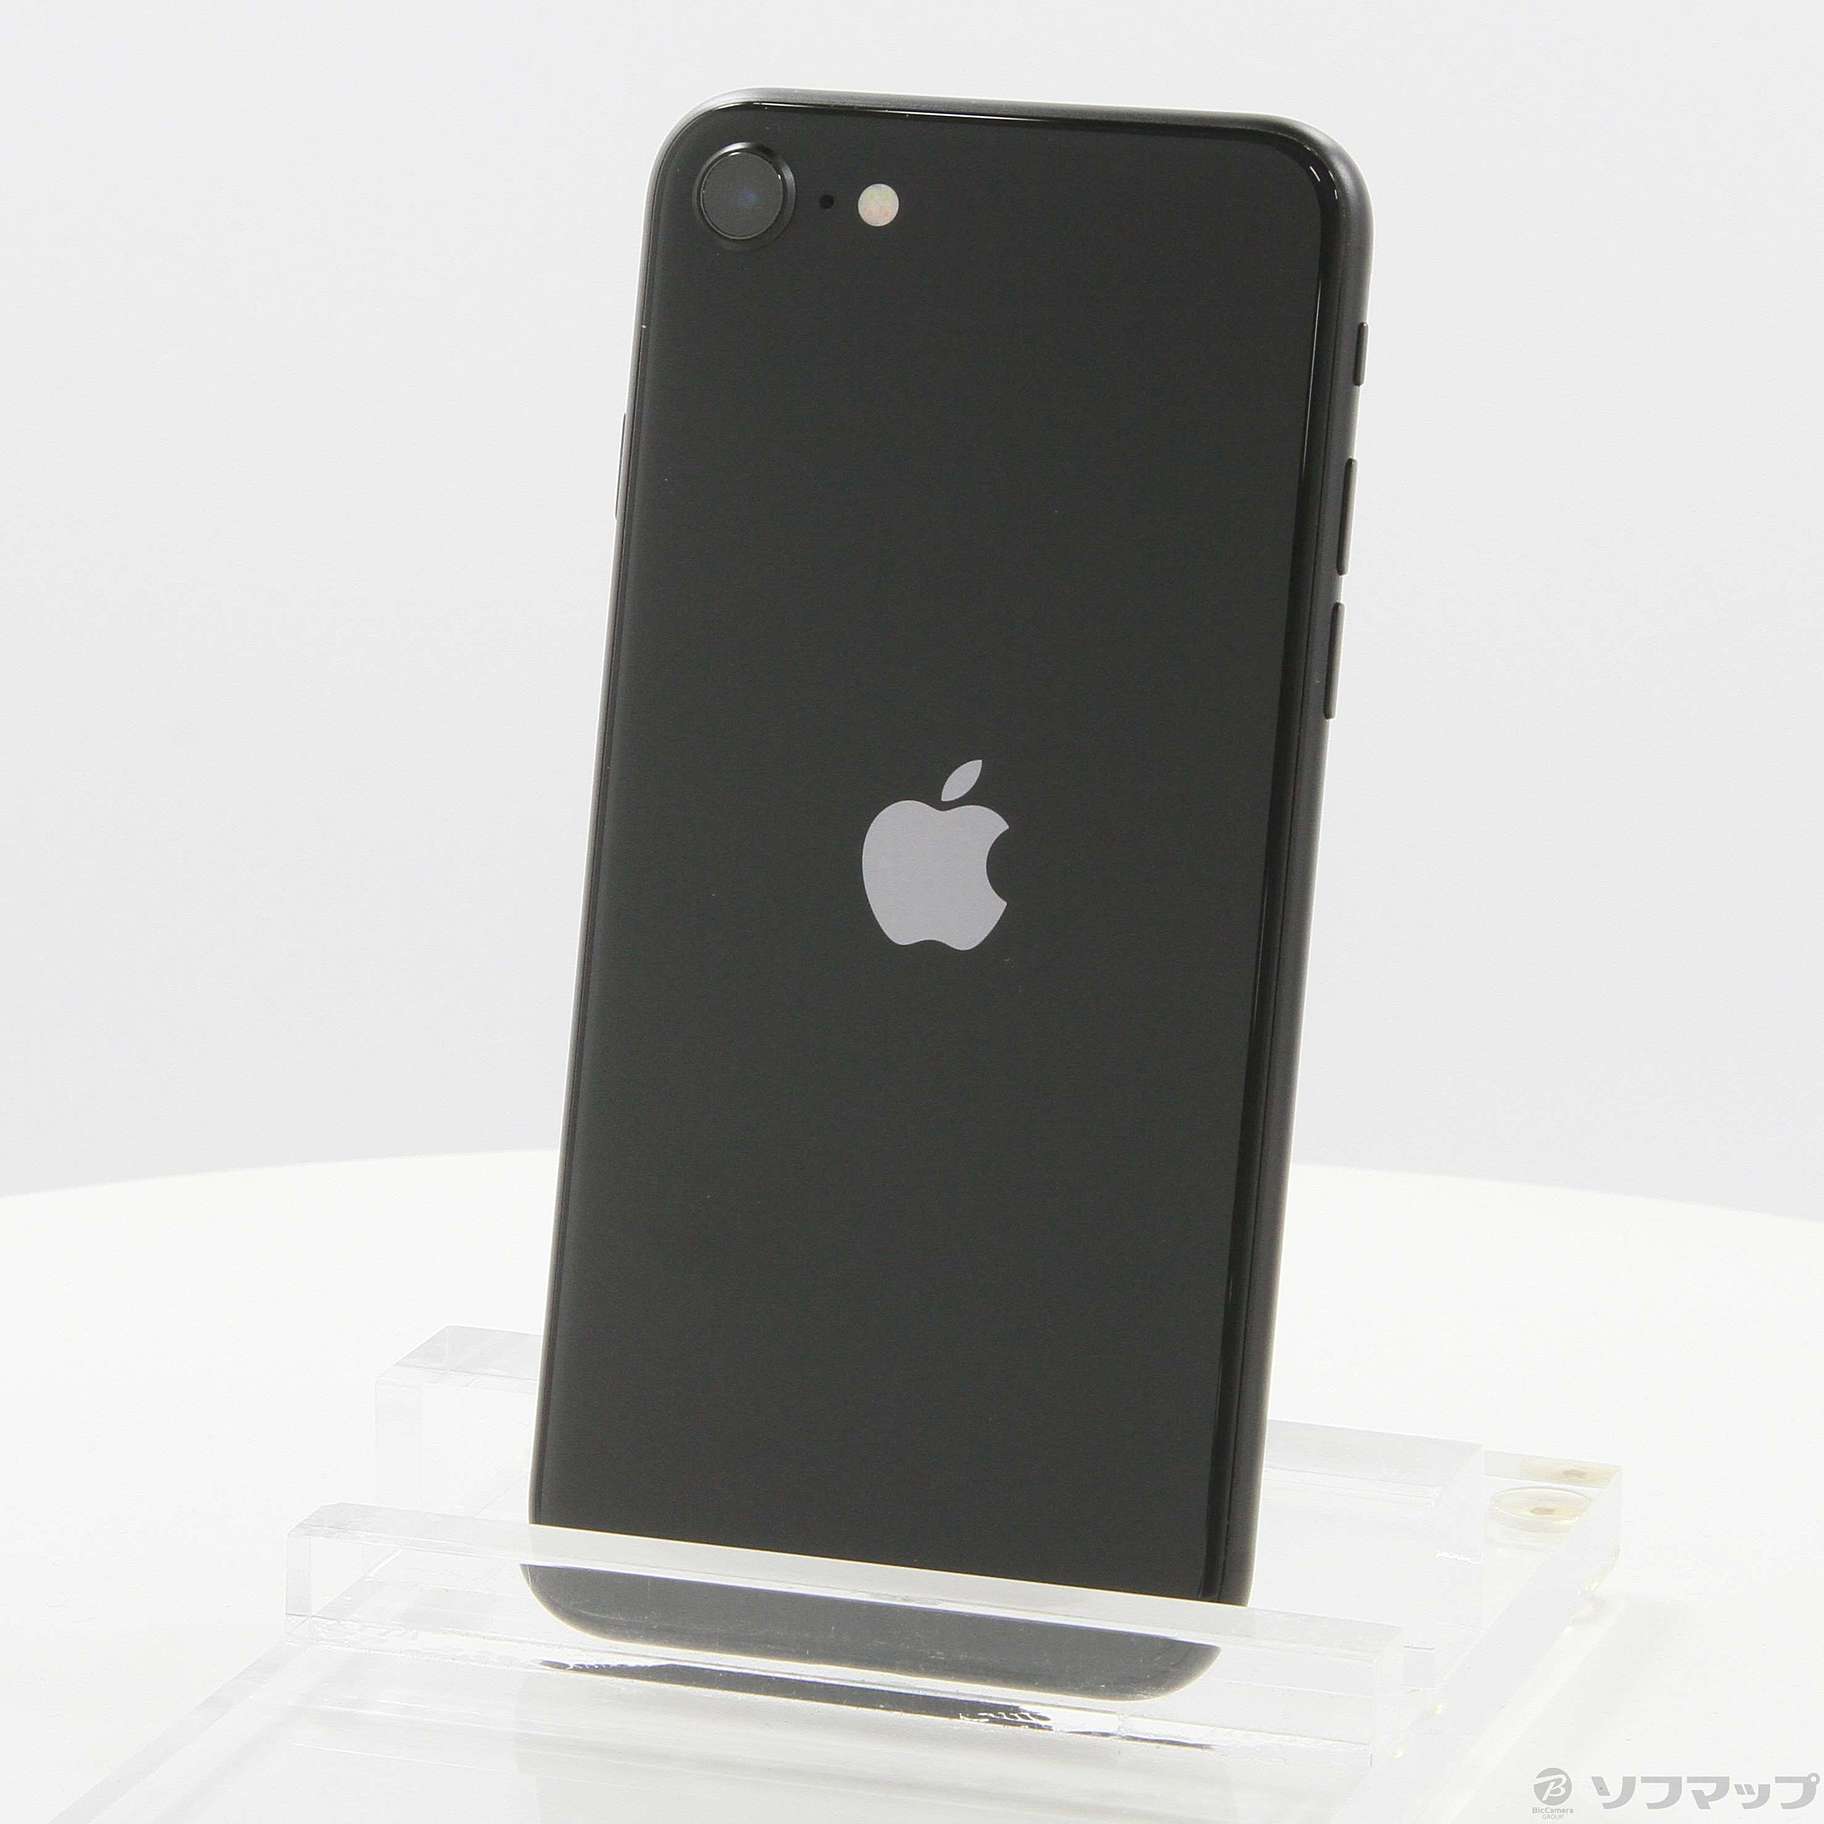 iPhone SE 第2世代 (SE2) ブラック 128GB SIMフリー新品SIMタイプnanoe